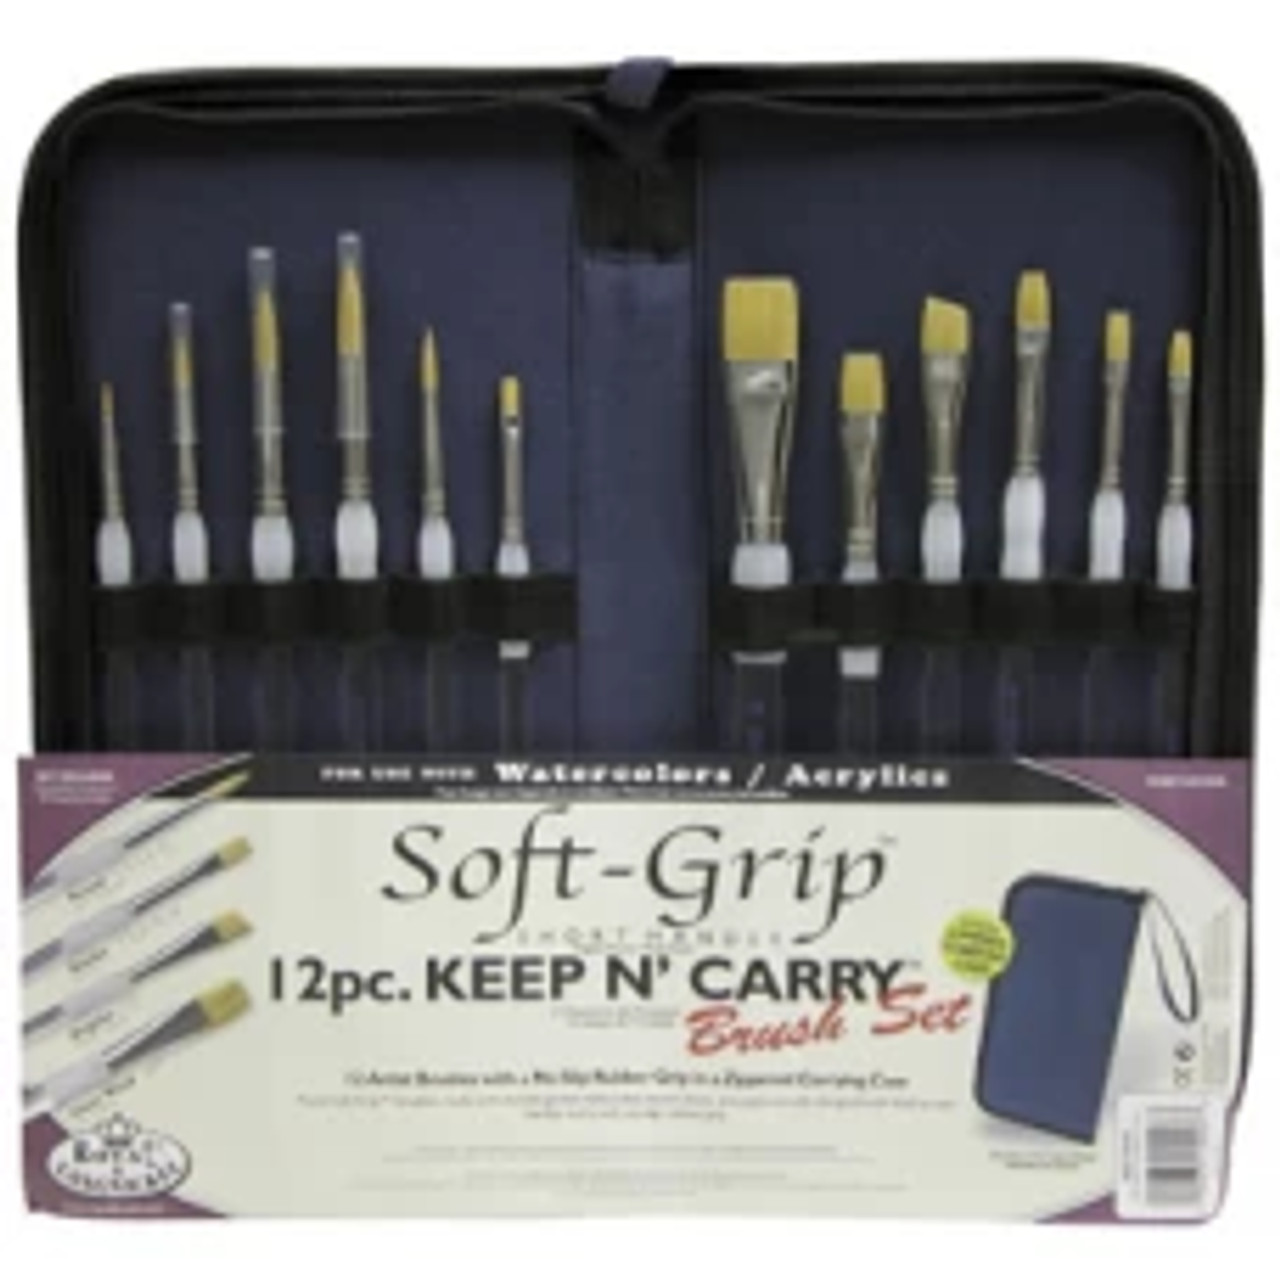 Royal Soft Grip 12 Brush Set in Case